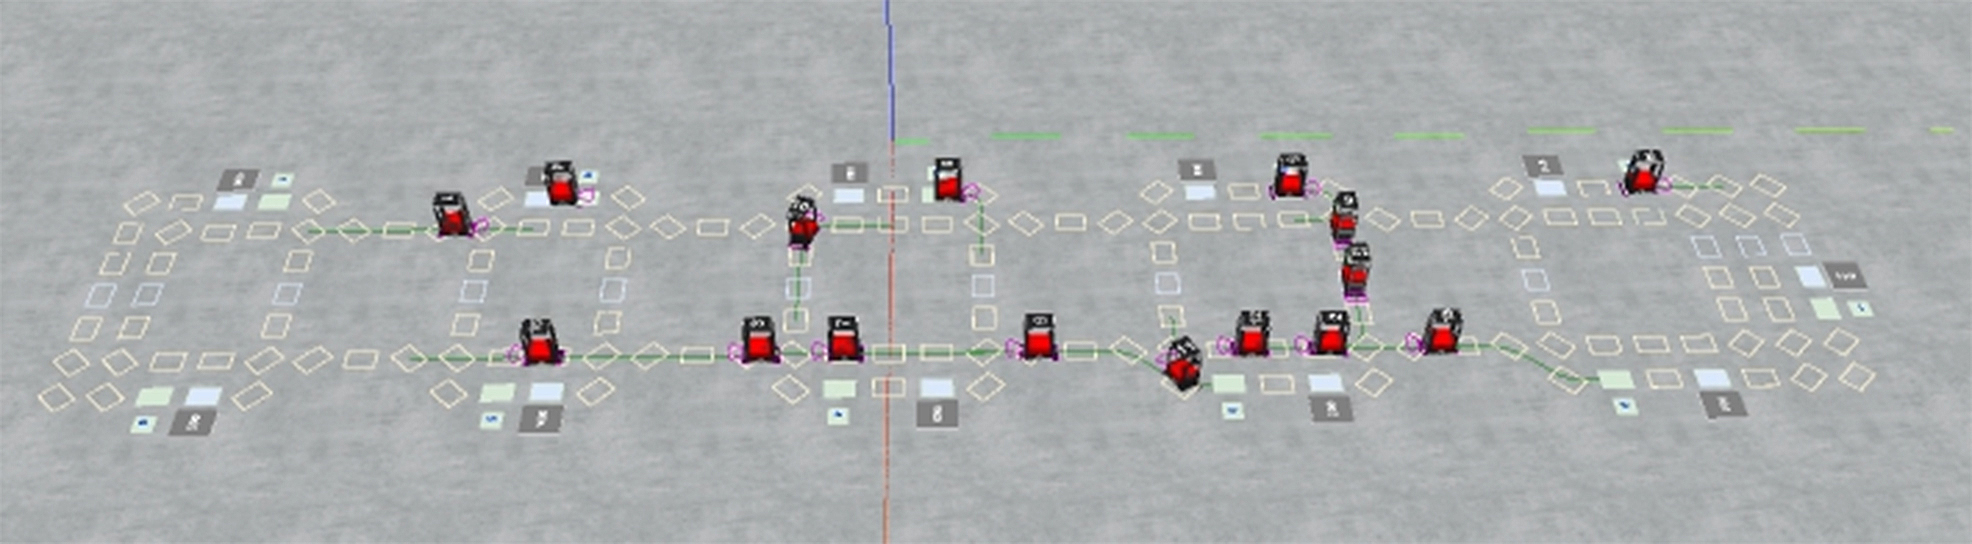 A simulation of Prime Vision’s robotic sorting fleet